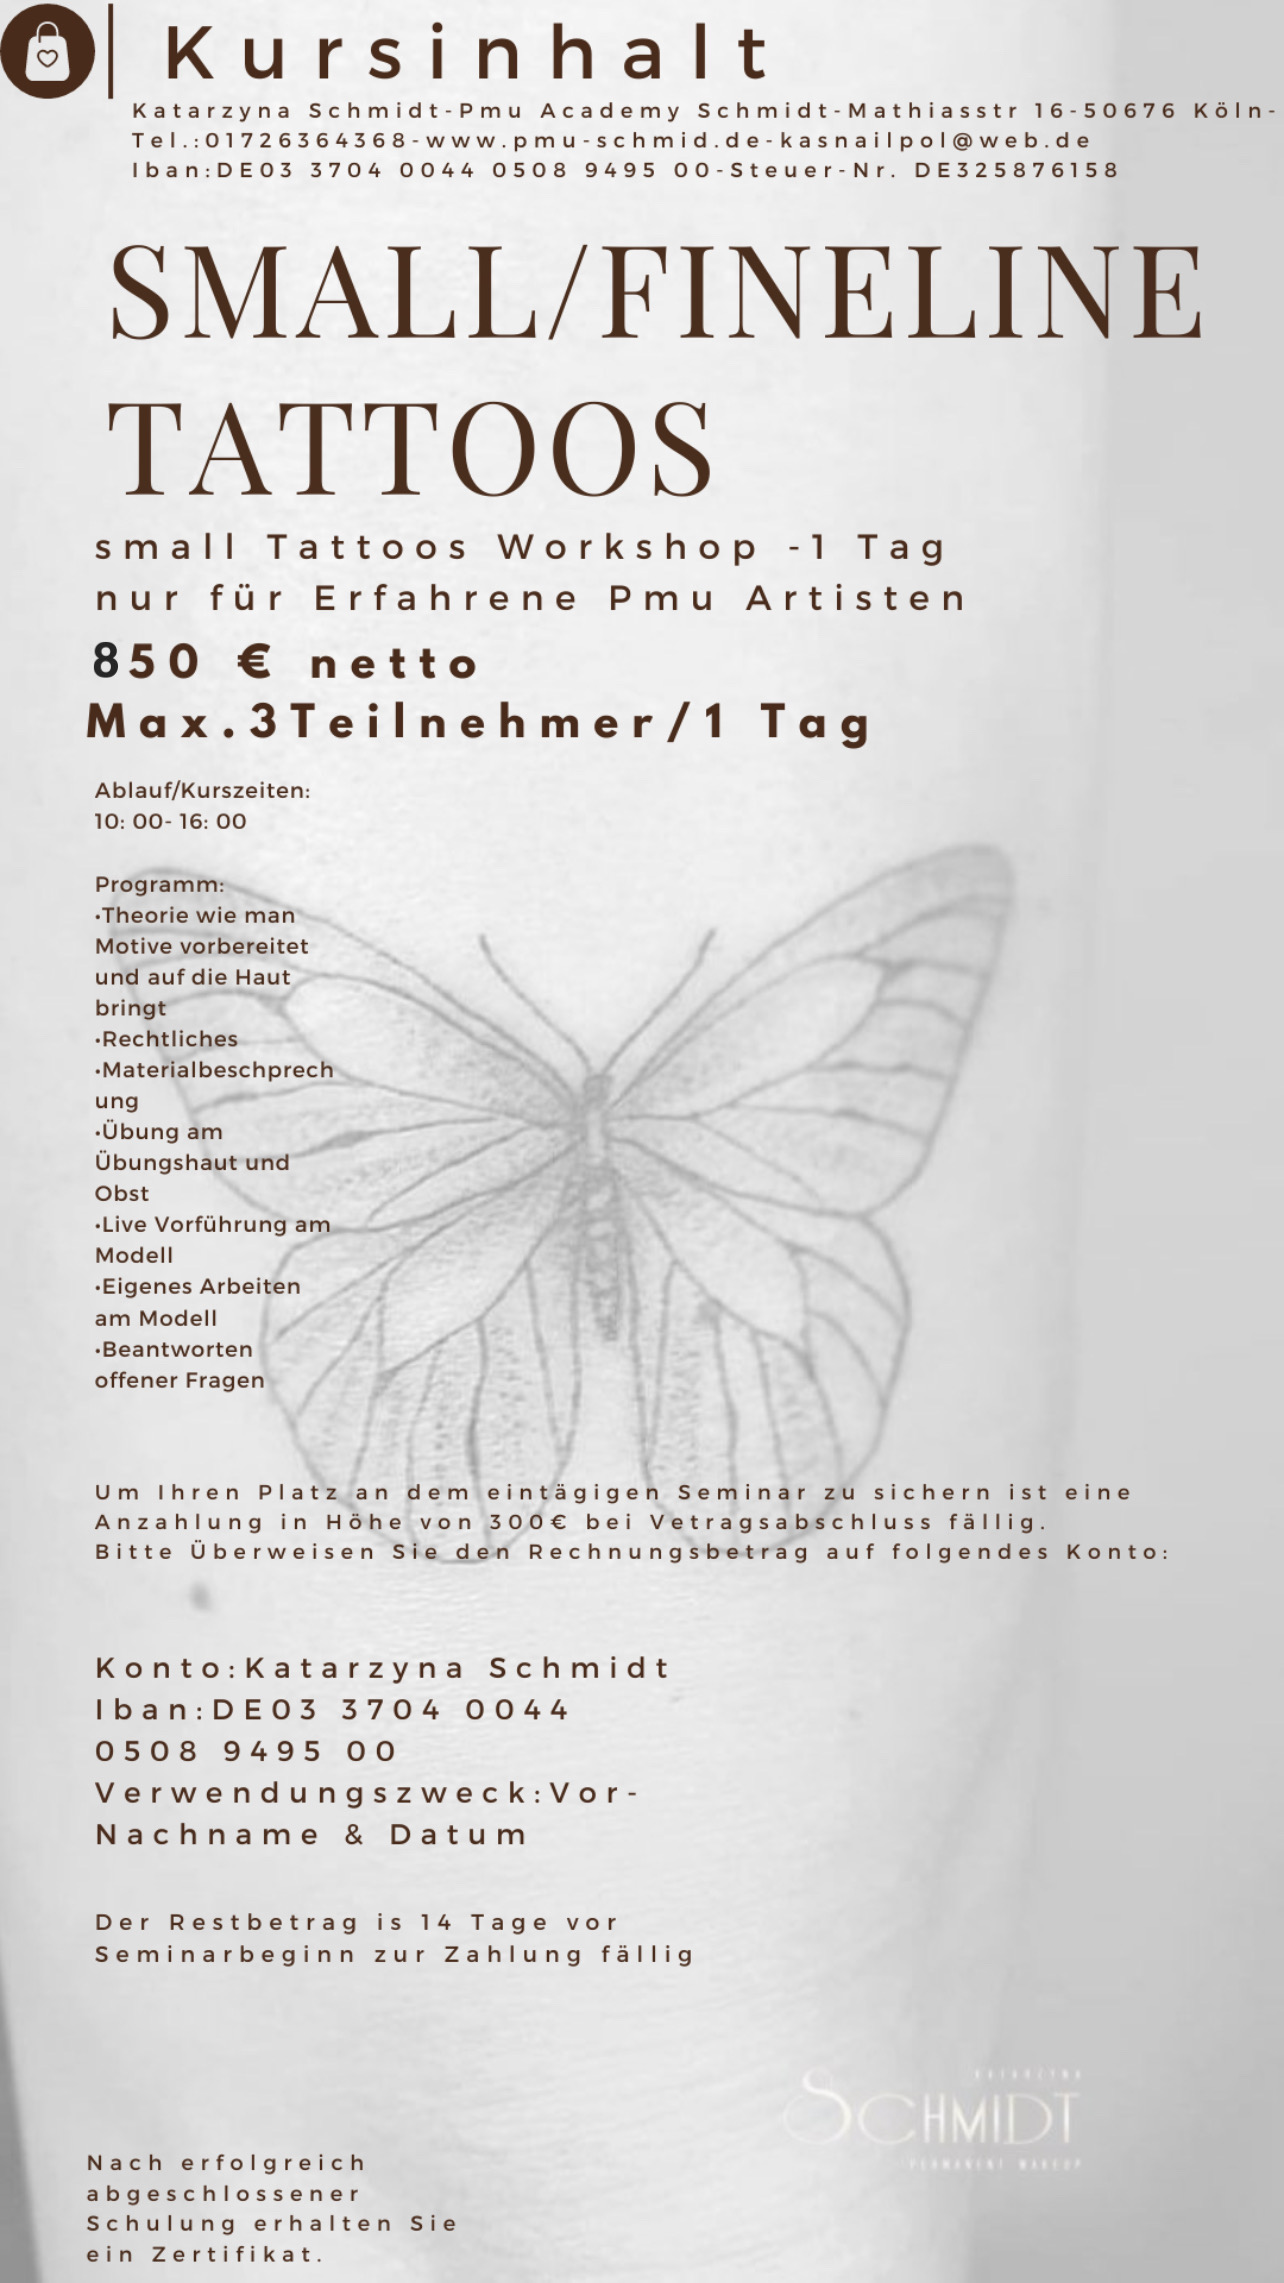 Small/Fineline Tattoosworkshop